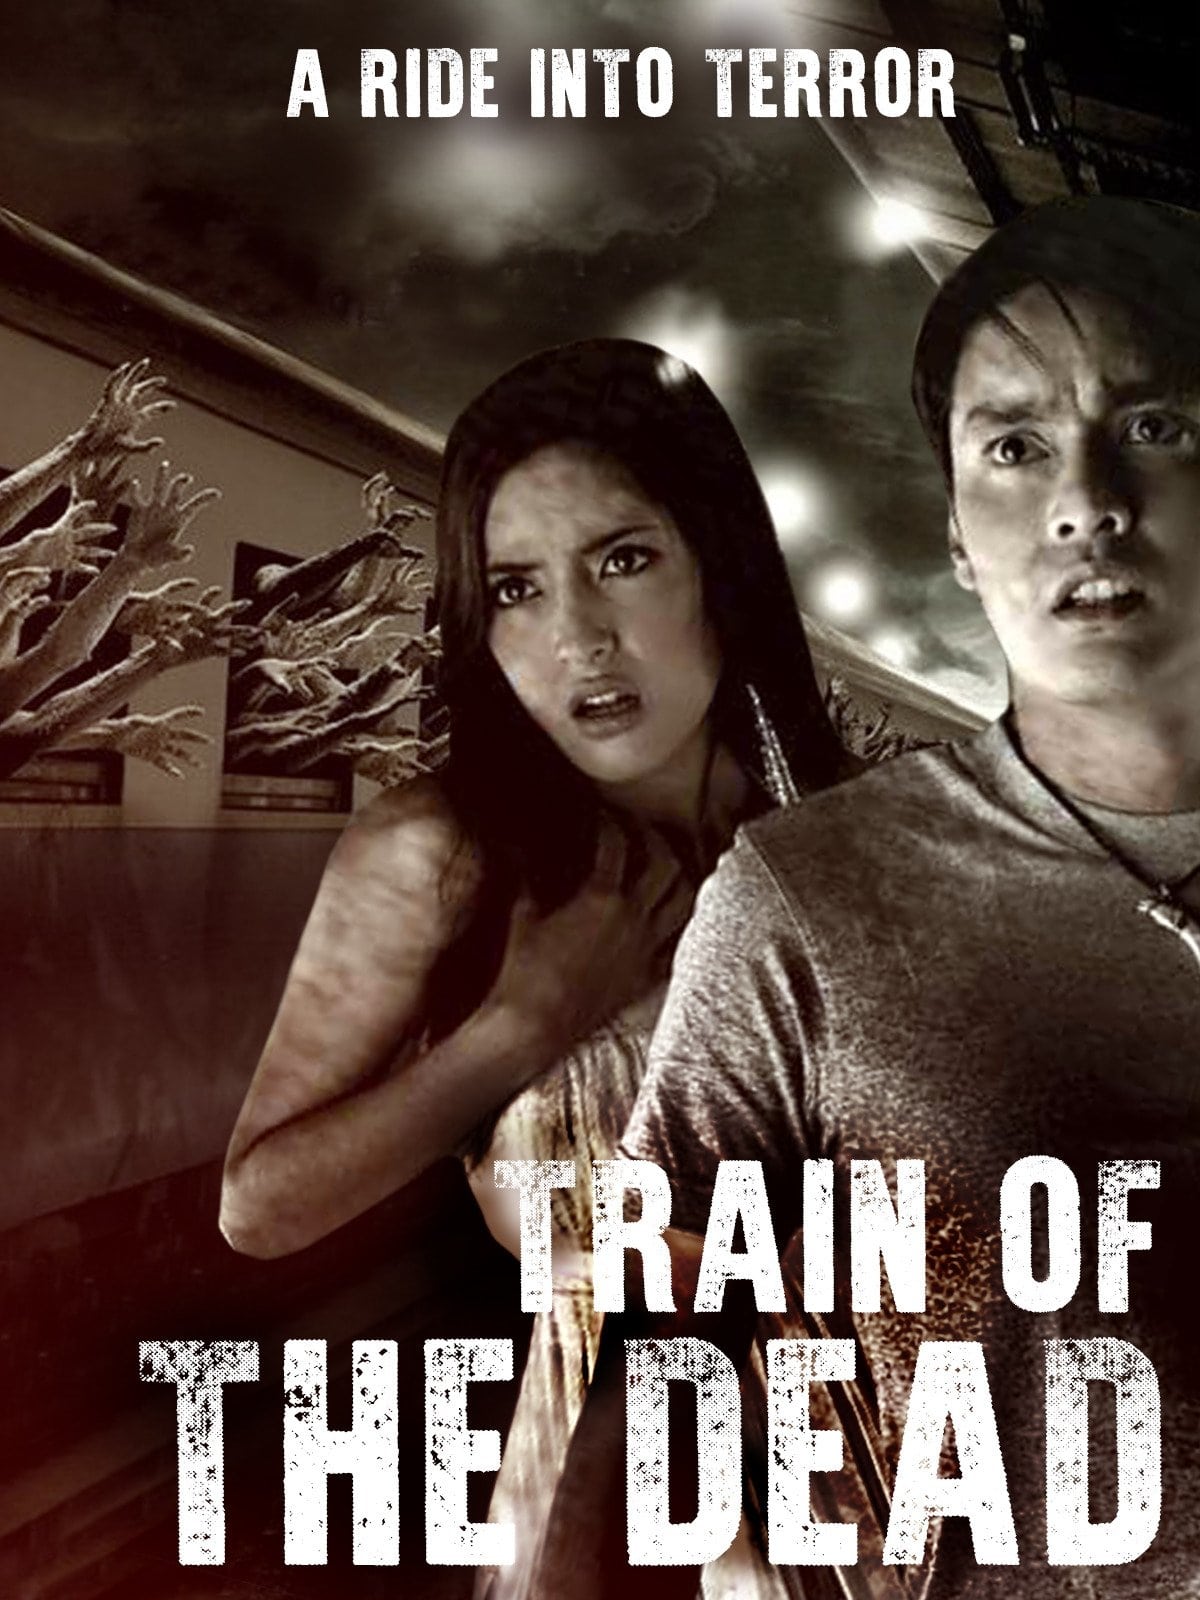 Train of the Dead (2007)